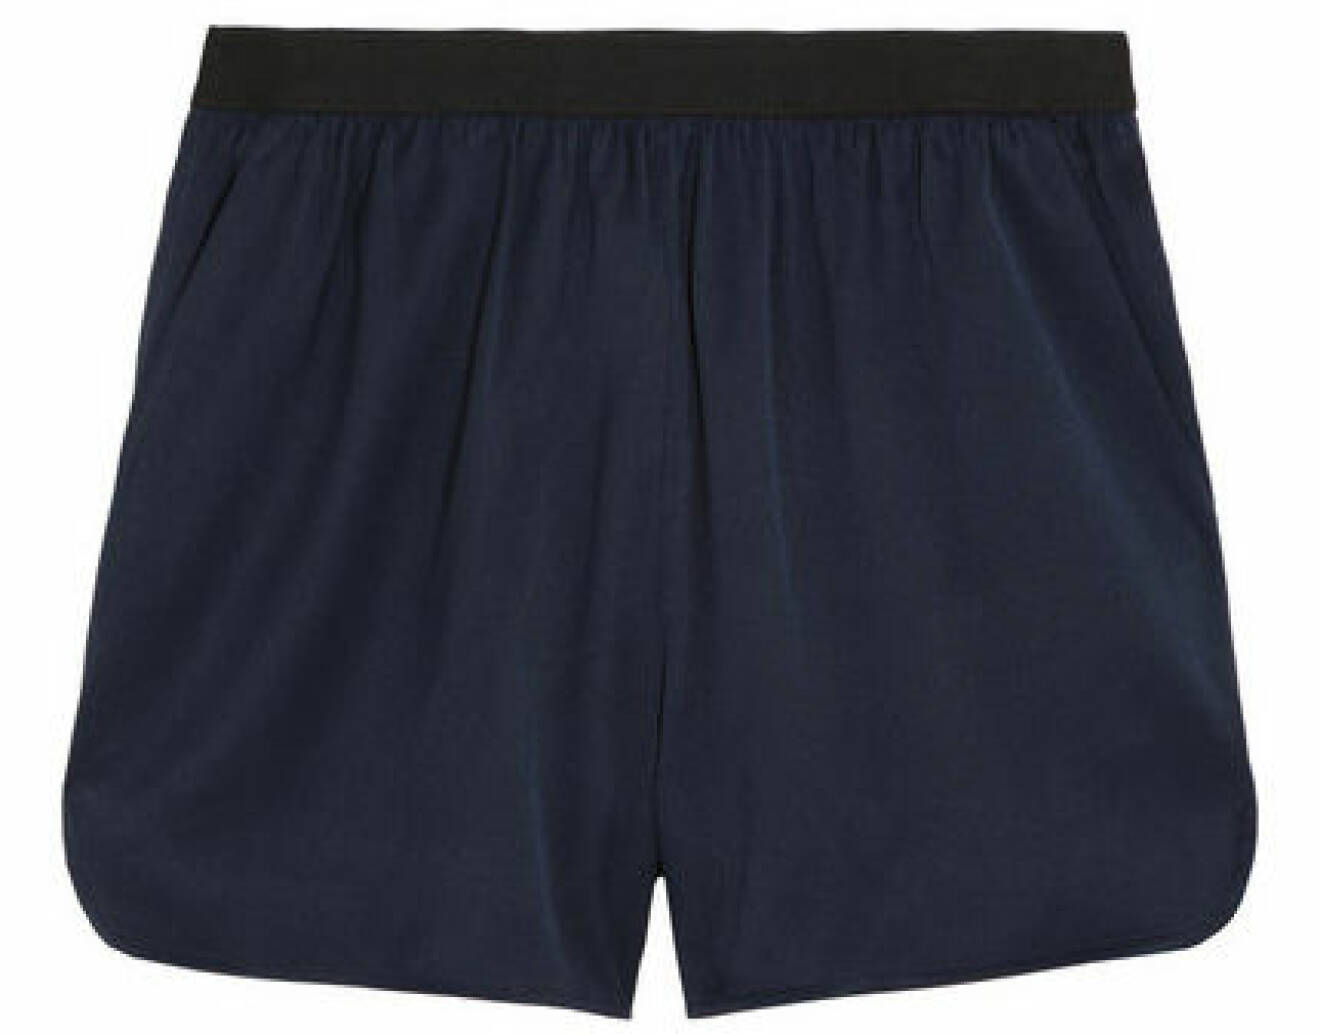 Shorts, 2207 kr, T by Alexander Wang